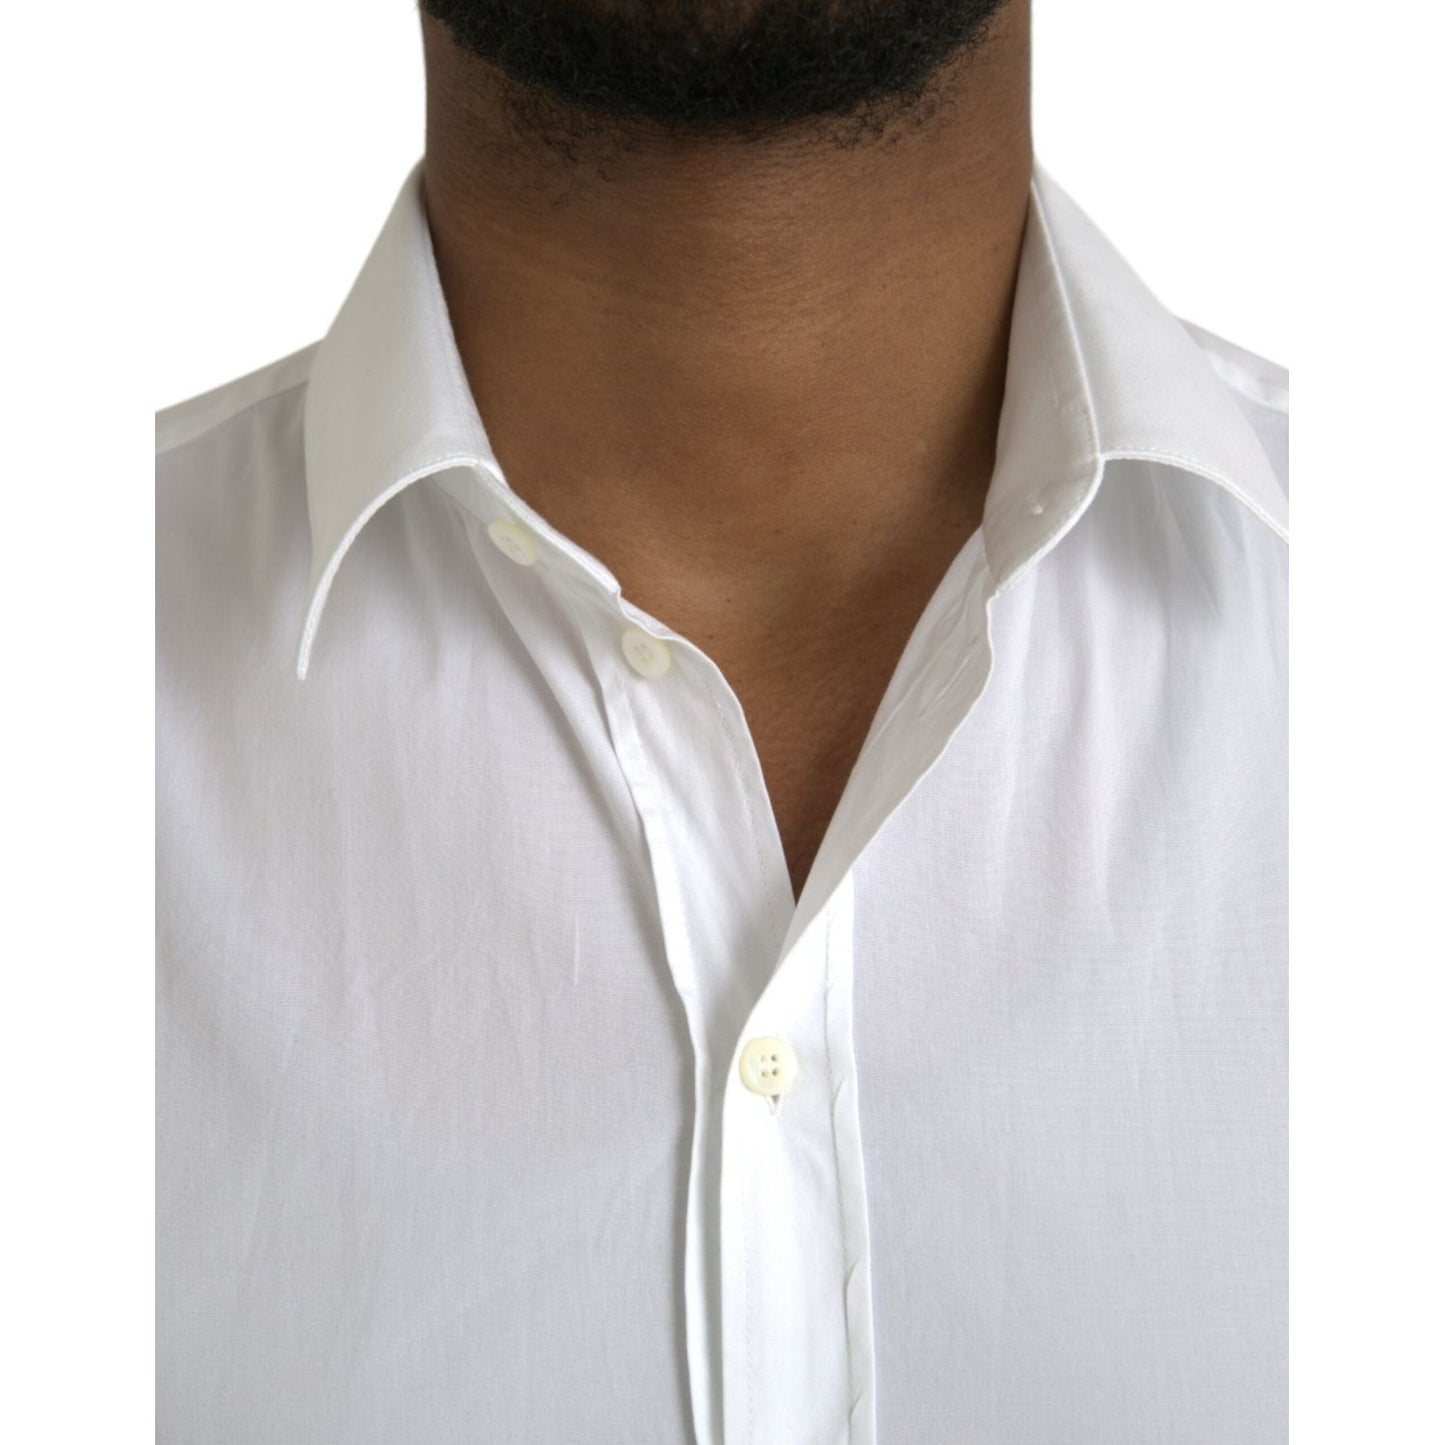 Dolce & Gabbana White Cotton Stretch Formal SICILIA Shirt white-cotton-stretch-formal-sicilia-shirt